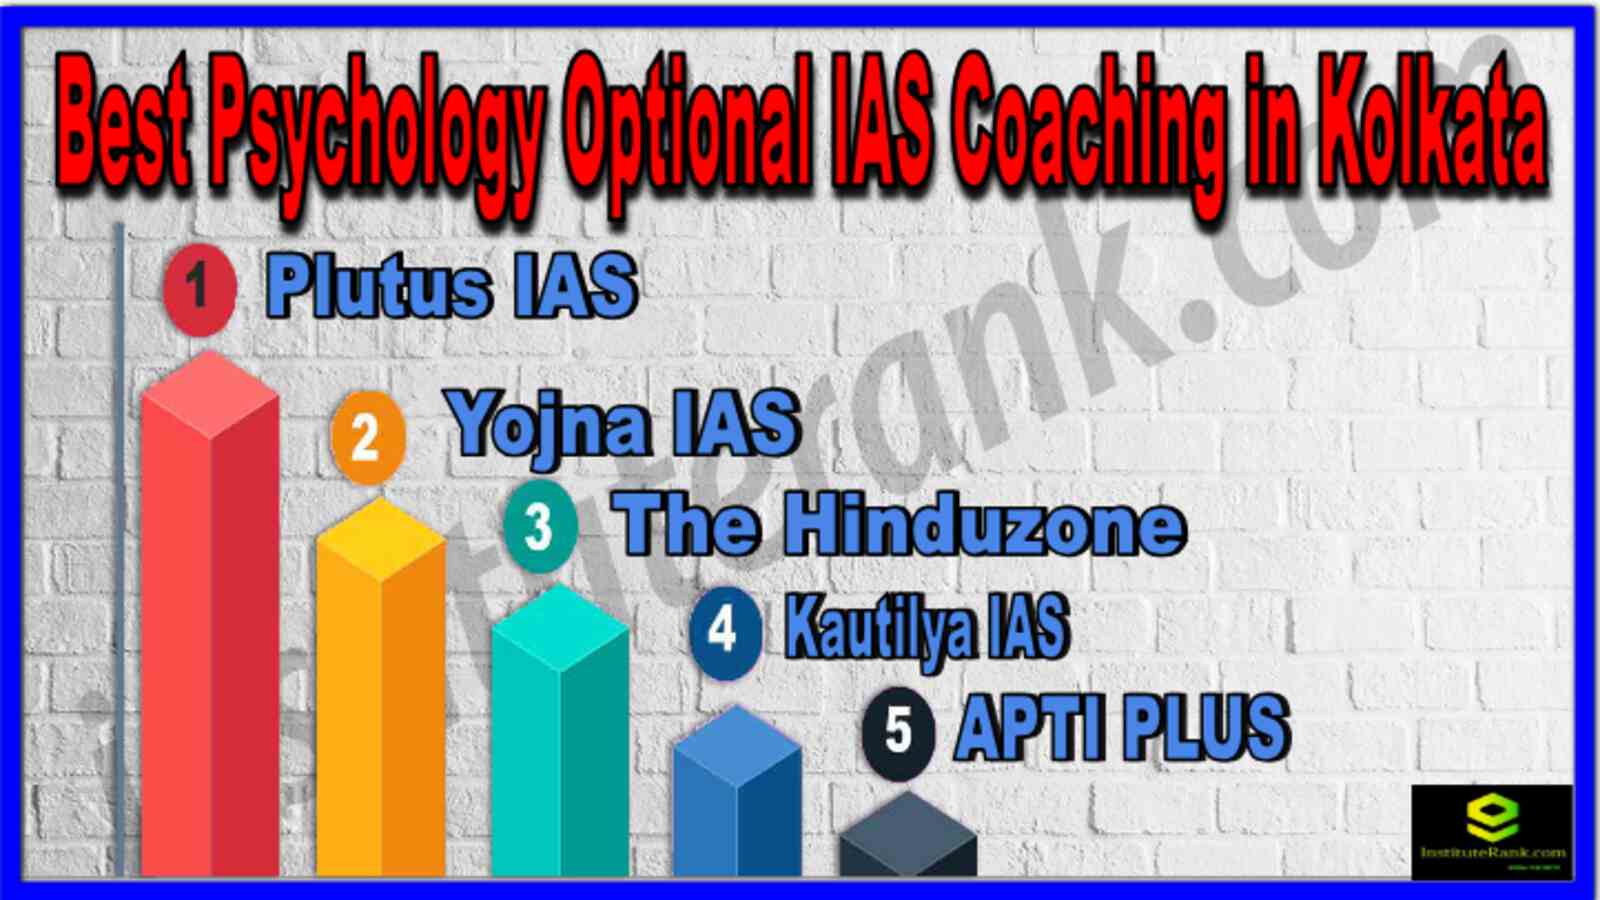 Best Psychology Optional IAS Coaching in Kolkata